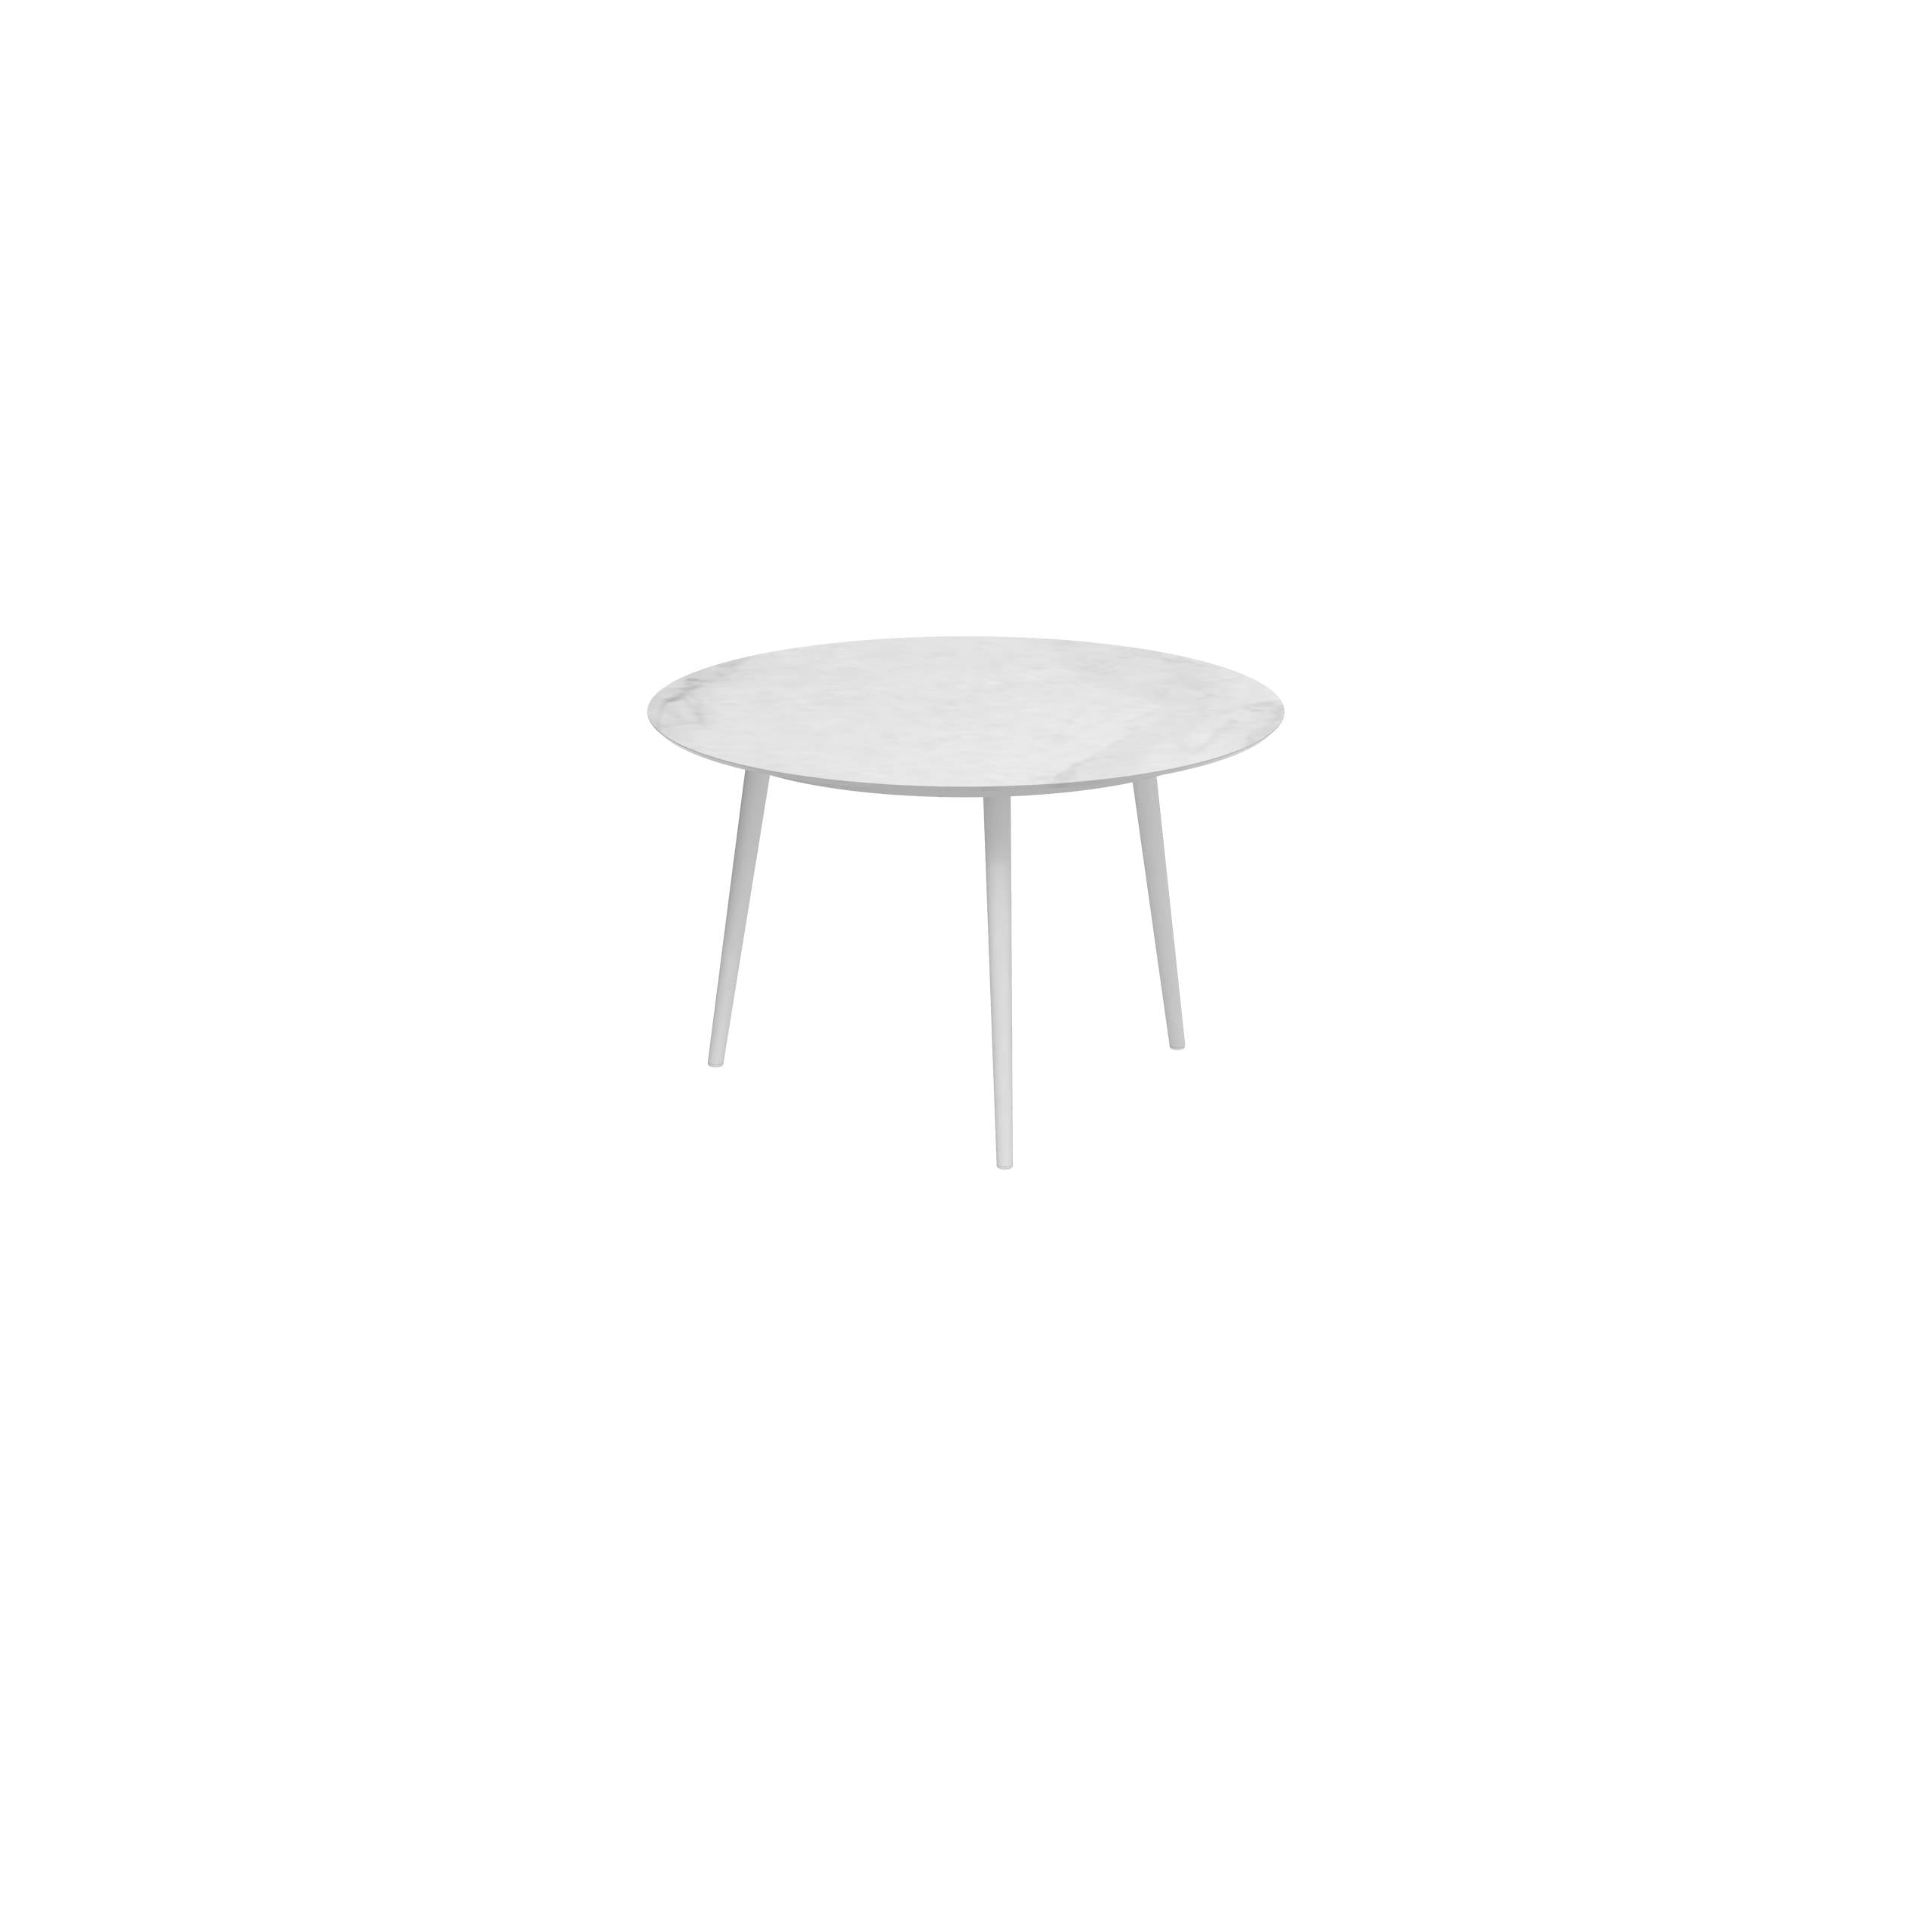 Styletto Standard Dining Table Ø 120cm Alu Legs White Ceramic Top Bianco Statuario